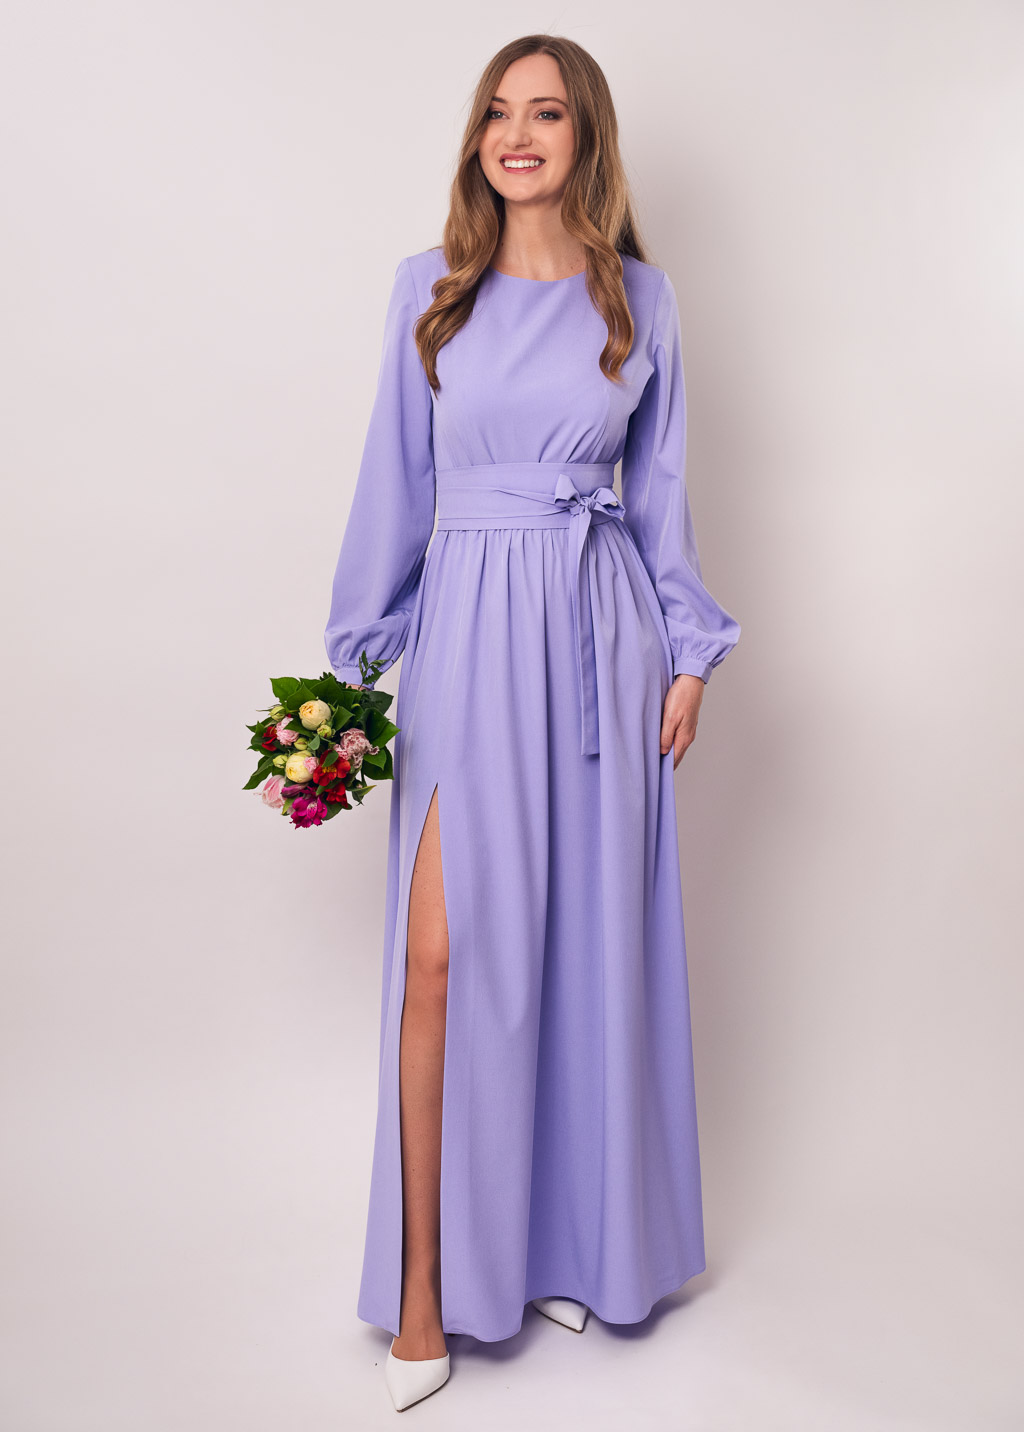 Light purple slit dress with belt